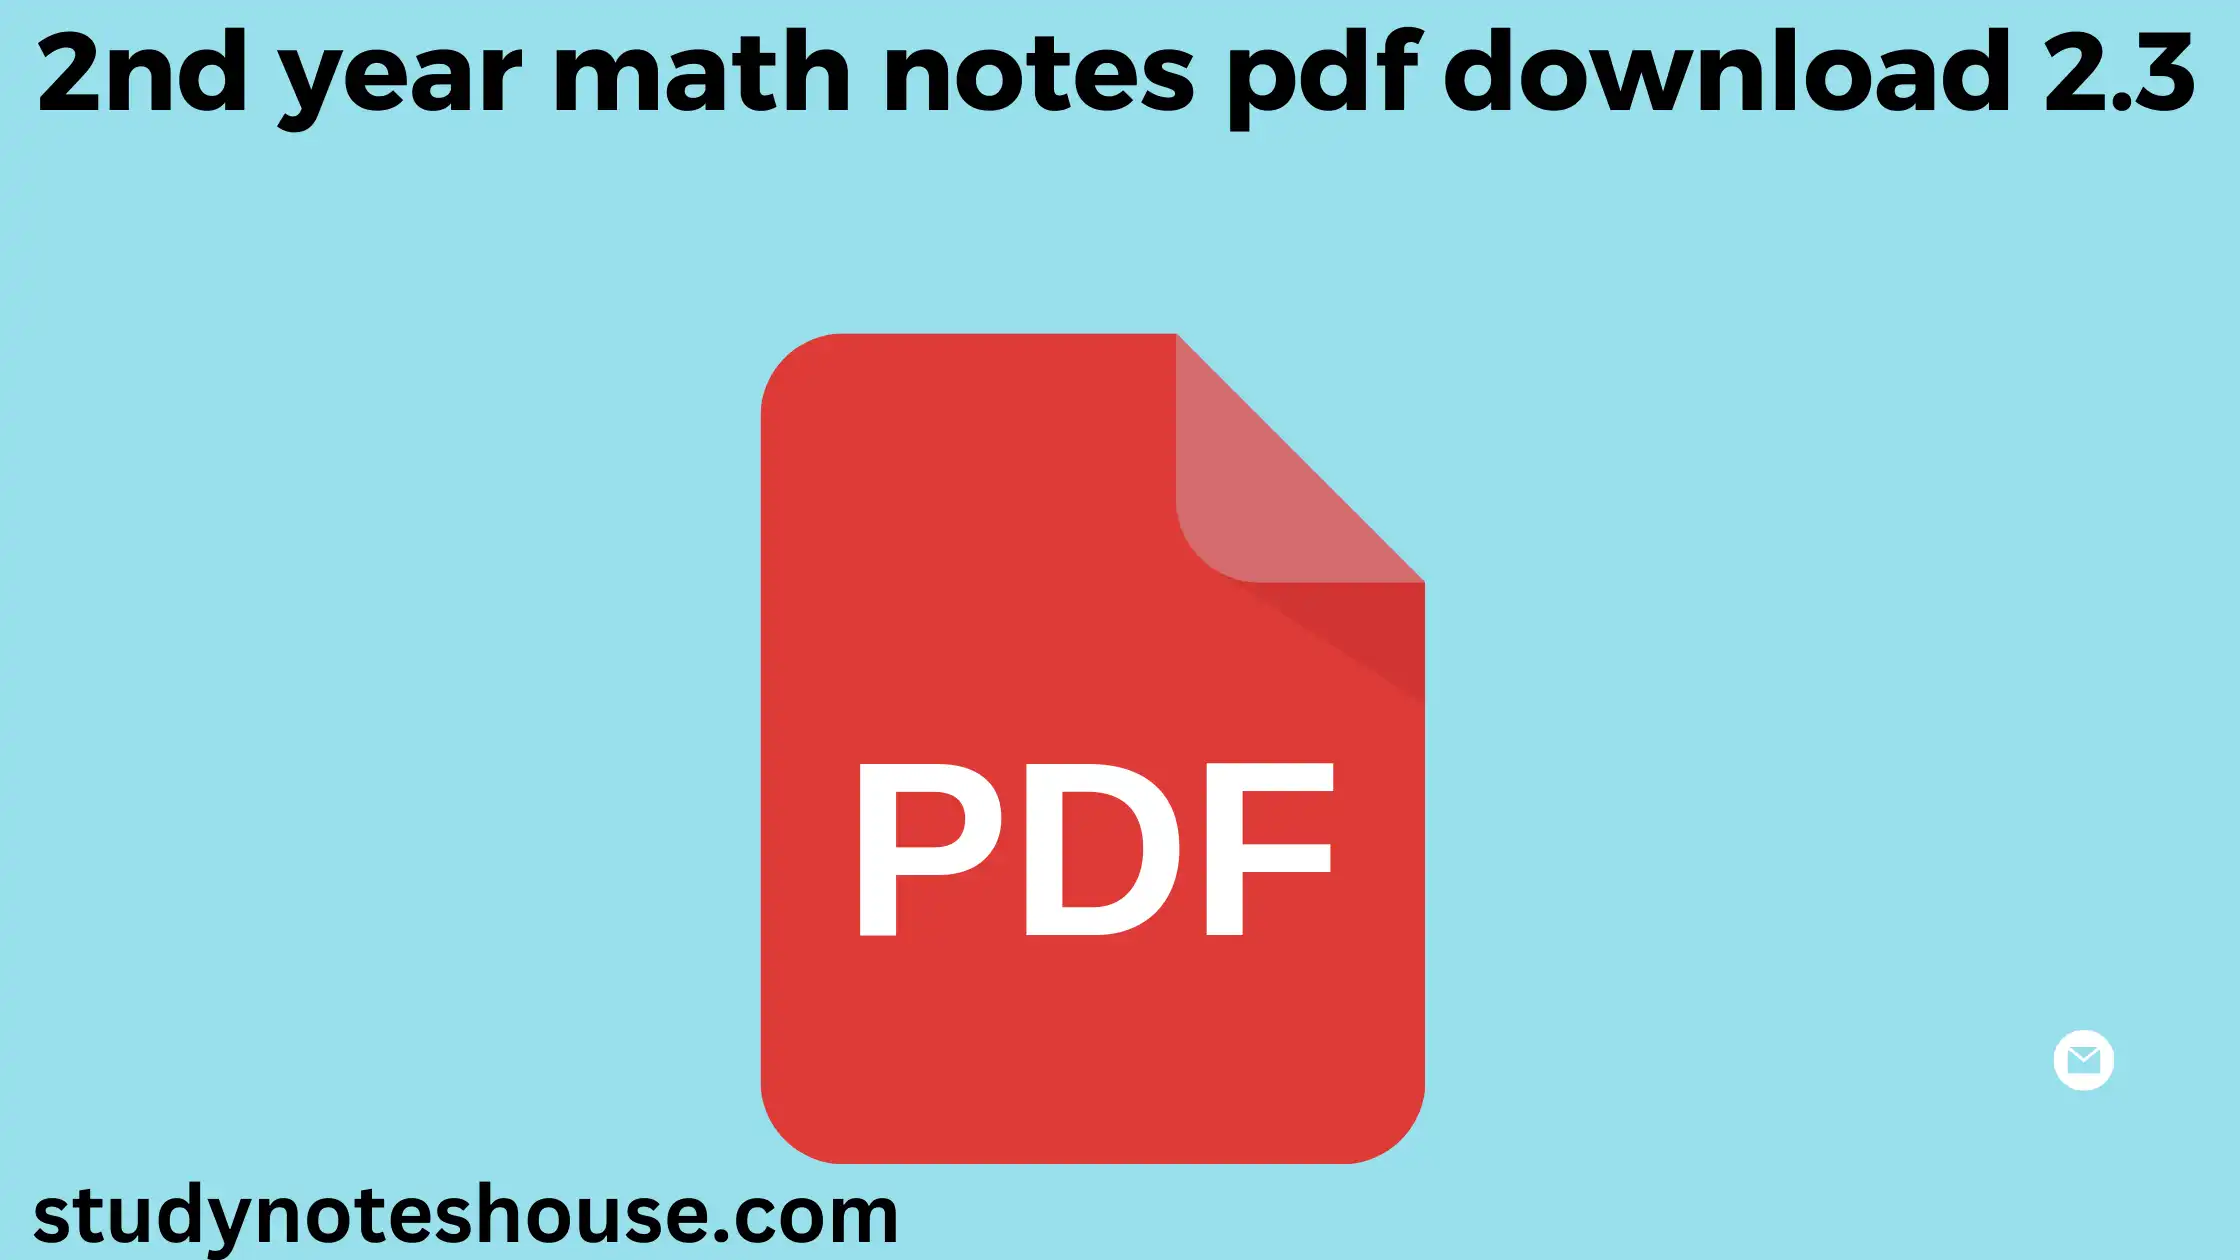 2nd year math notes pdf download 2.3